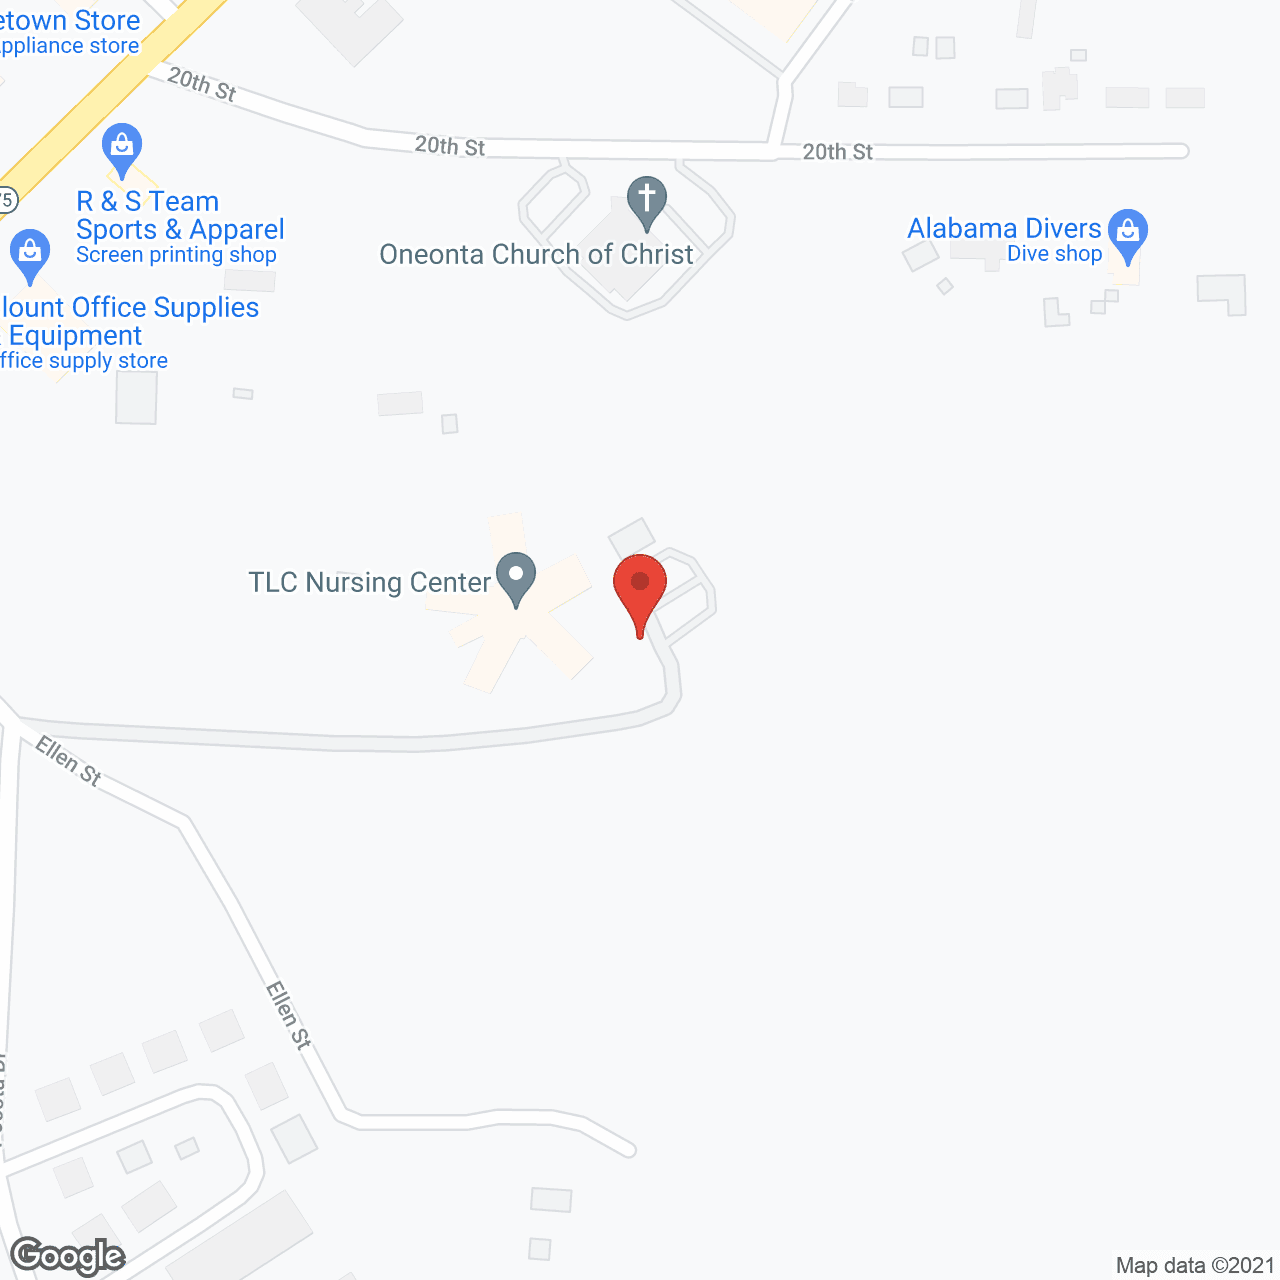 TLC Nursing Center in google map